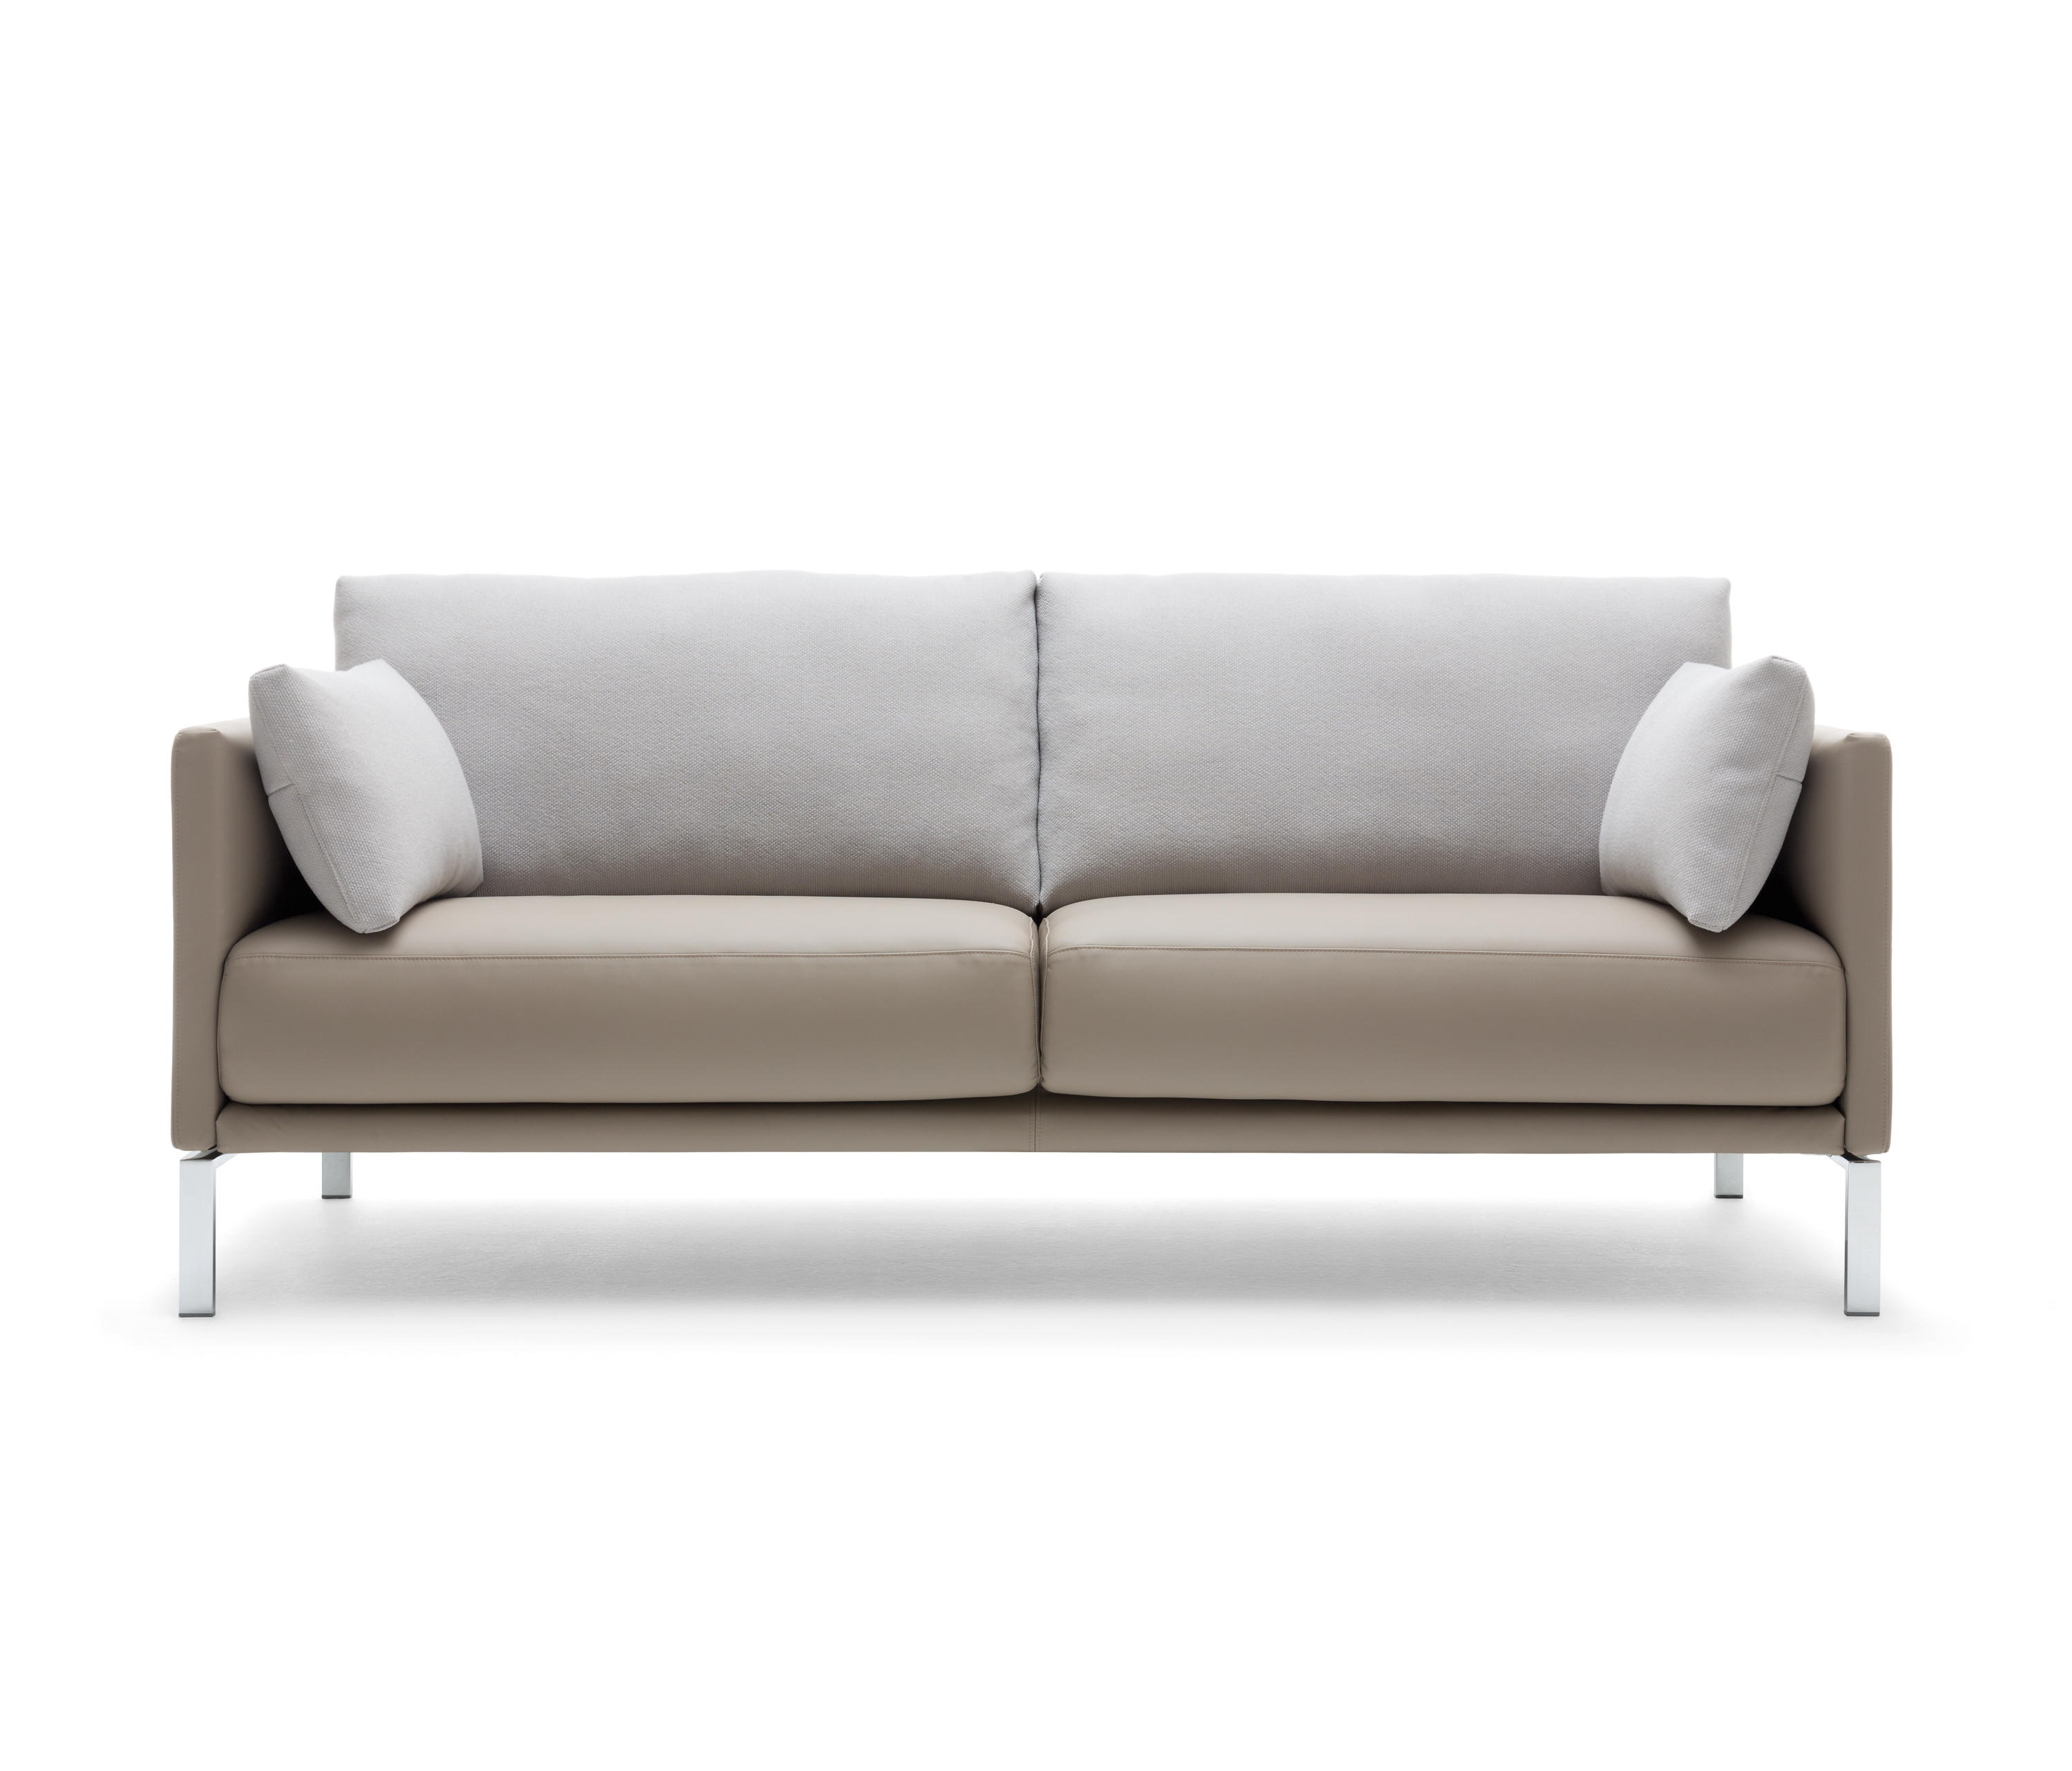 Verrassend Rolf Benz 008 CARA & designer furniture | Architonic IZ-62